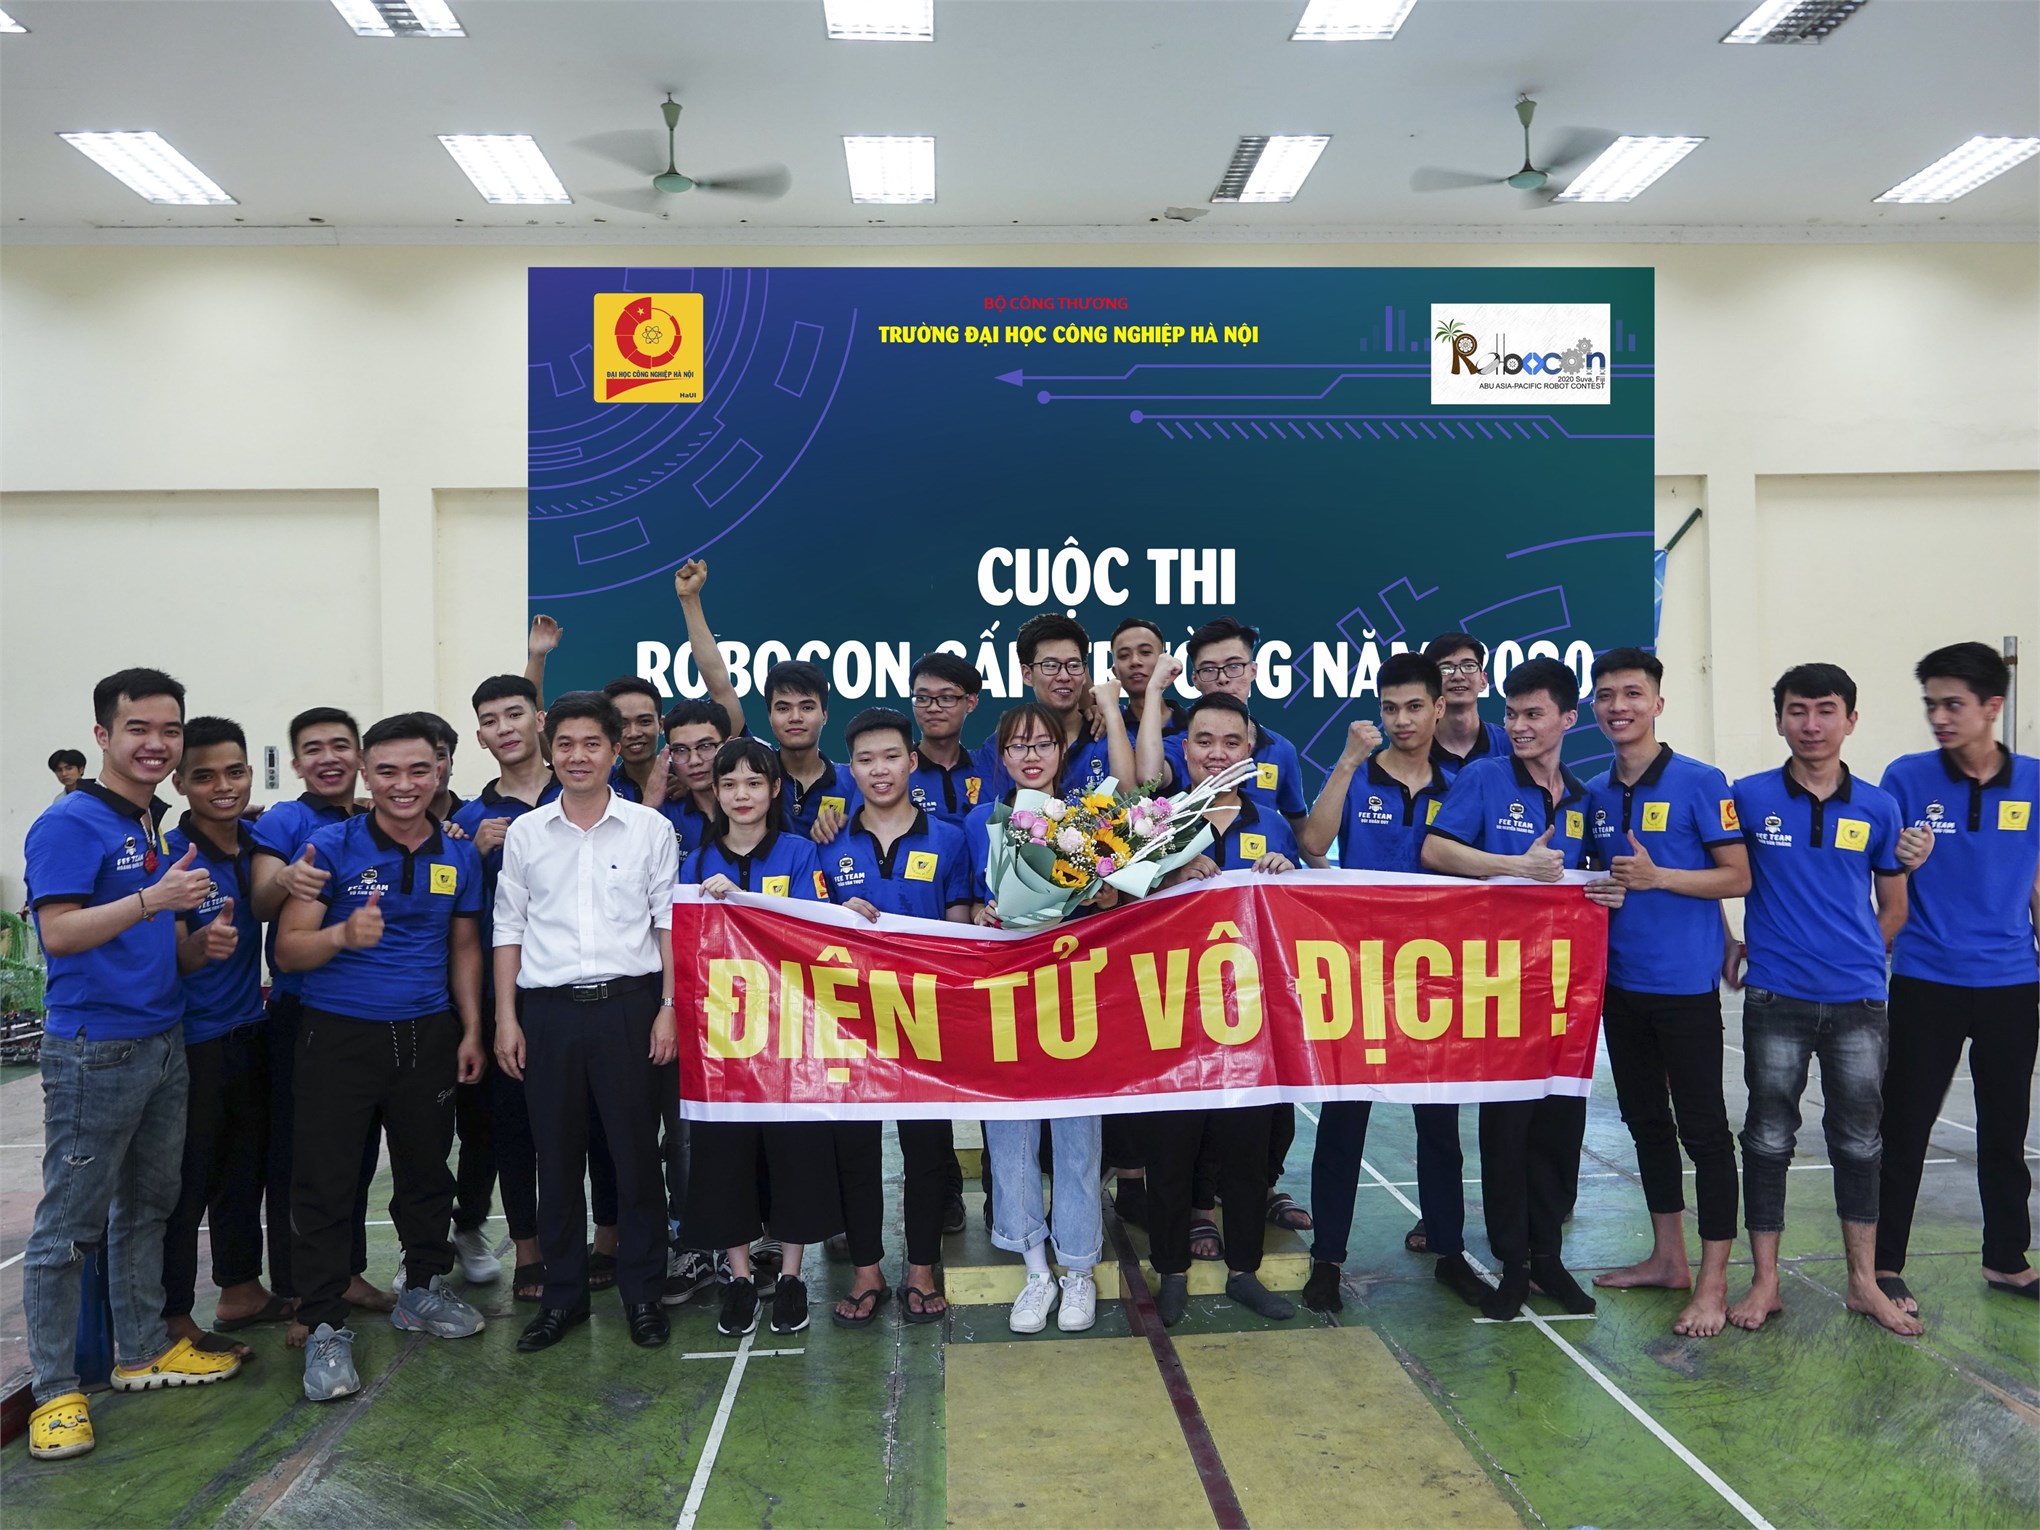 DTO3 team won First Prize at HaUI Robocon Contest 2020